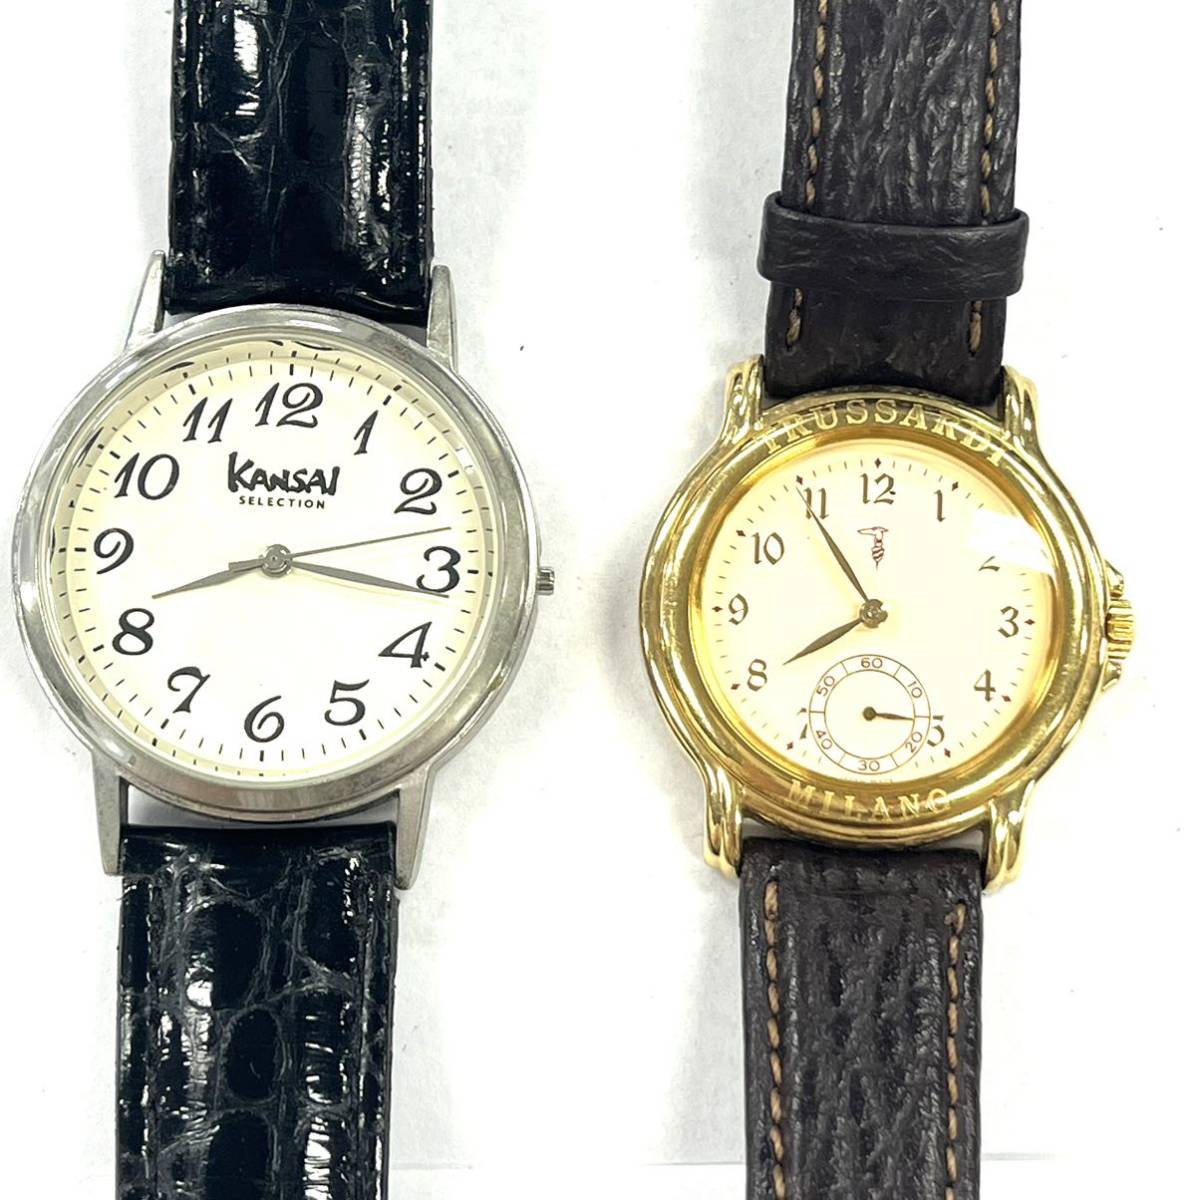 N135 腕時計 まとめ swatch Lapini TRUSSARDI KANSAI SELECTION SAT004 クォーツ ジャンク品 中古 訳あり_画像4